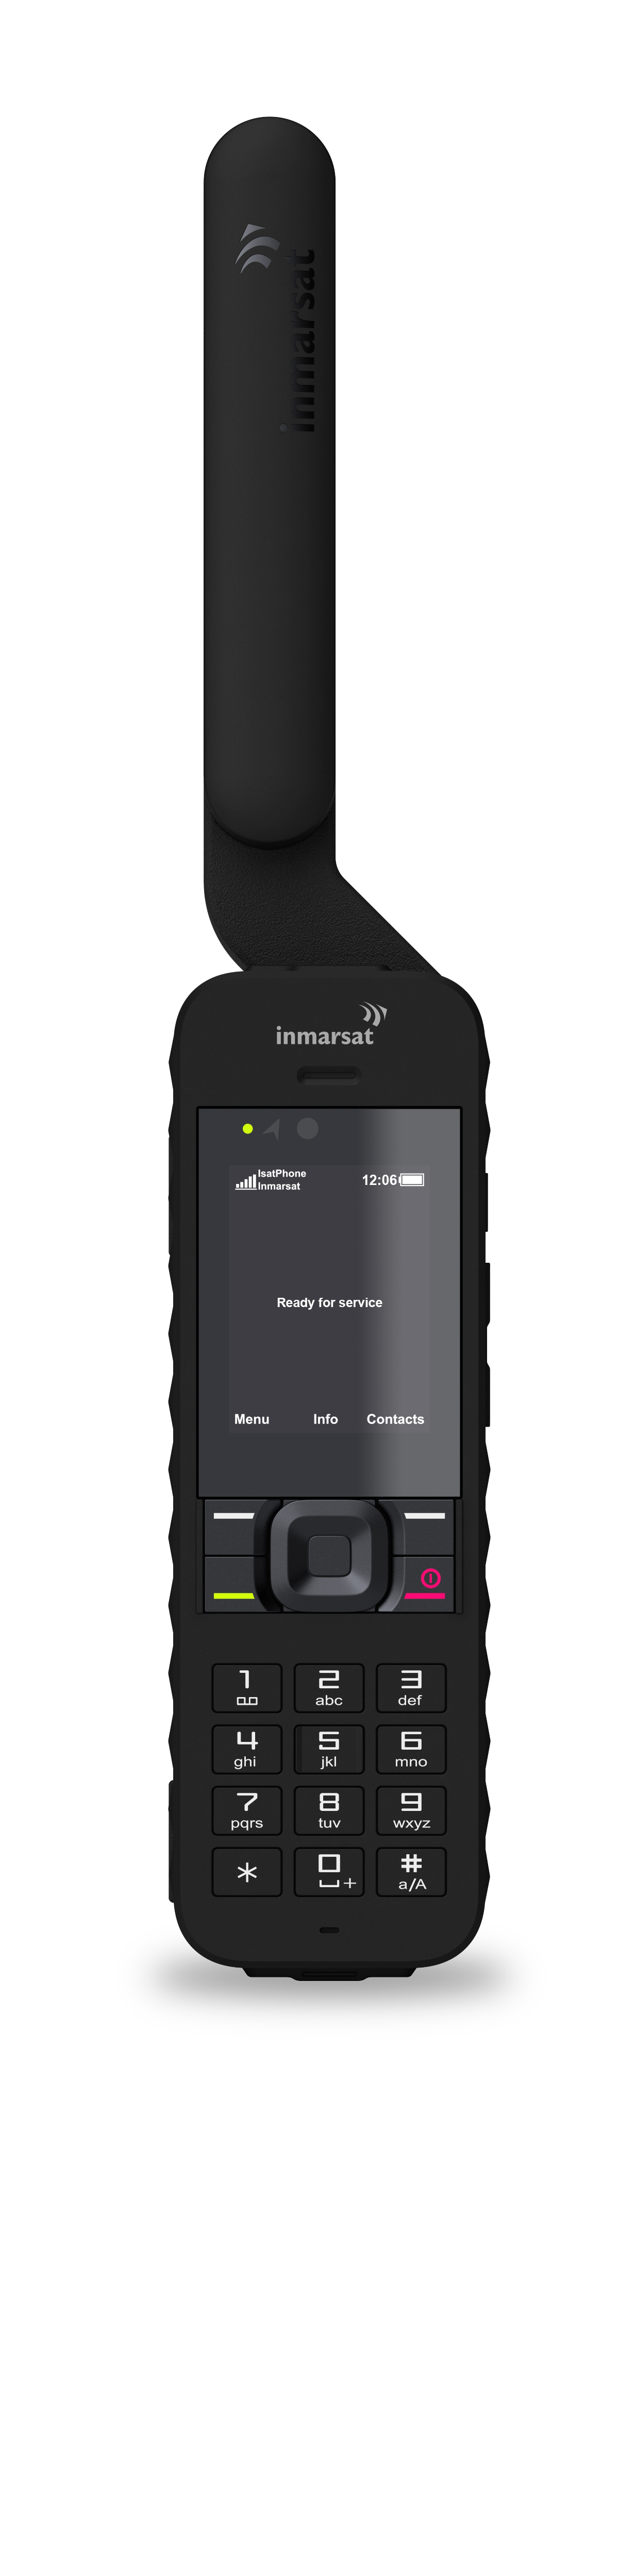 inmarsat-isatphone-2-satellite-phone-northernaxcess.png